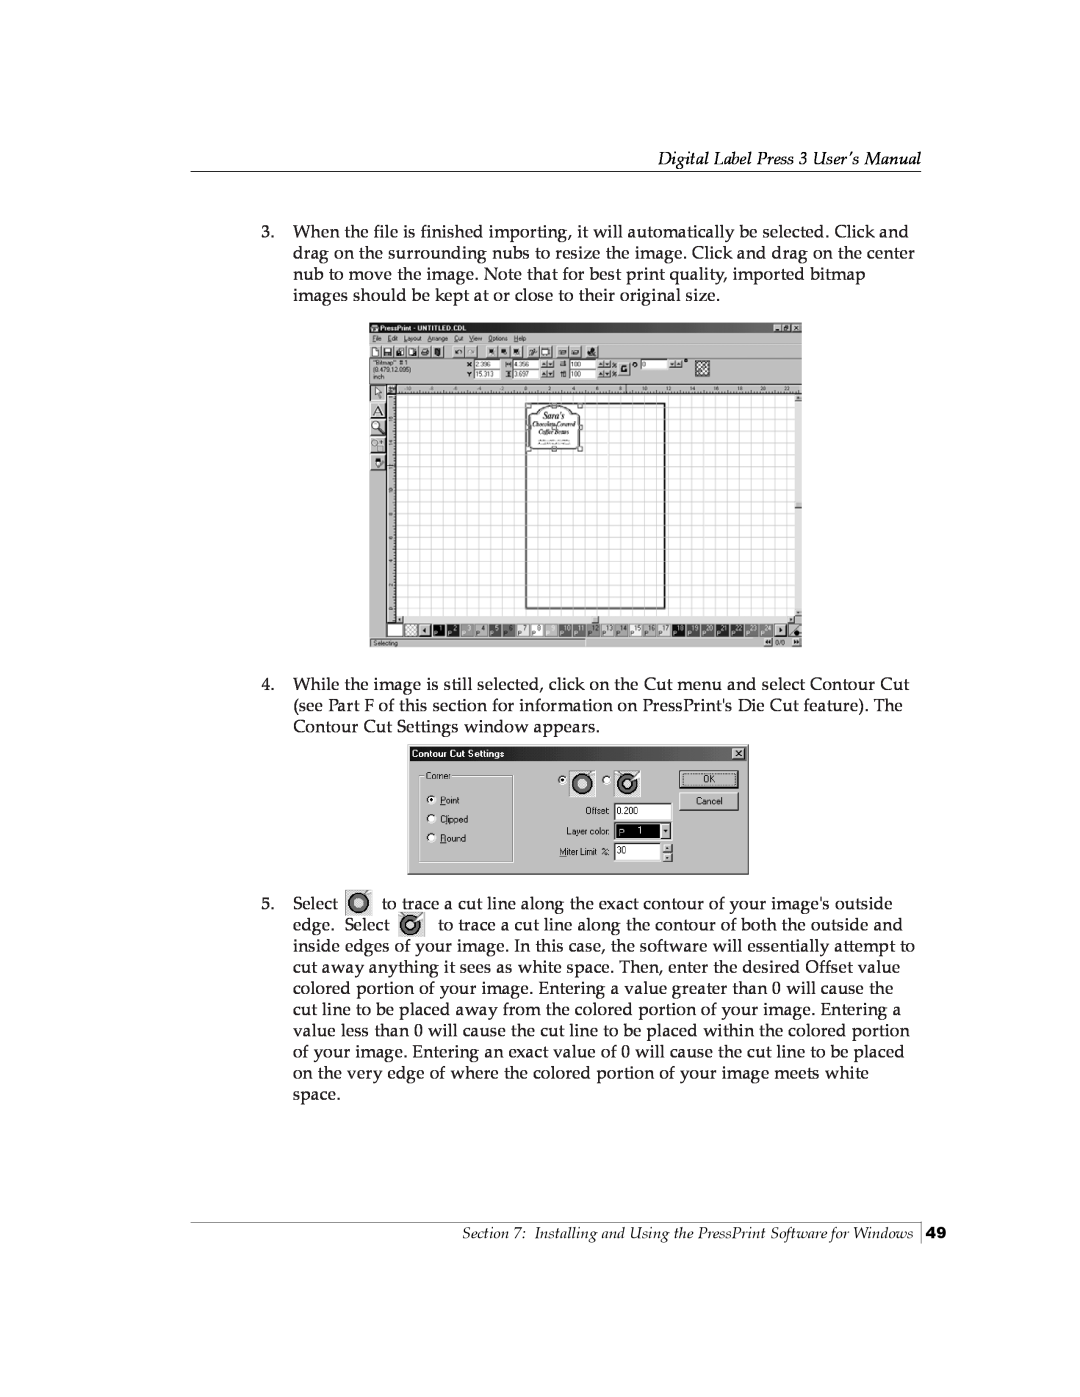 Primera Technology 510212 manual Digital Label Press 3 User’s Manual, Select 